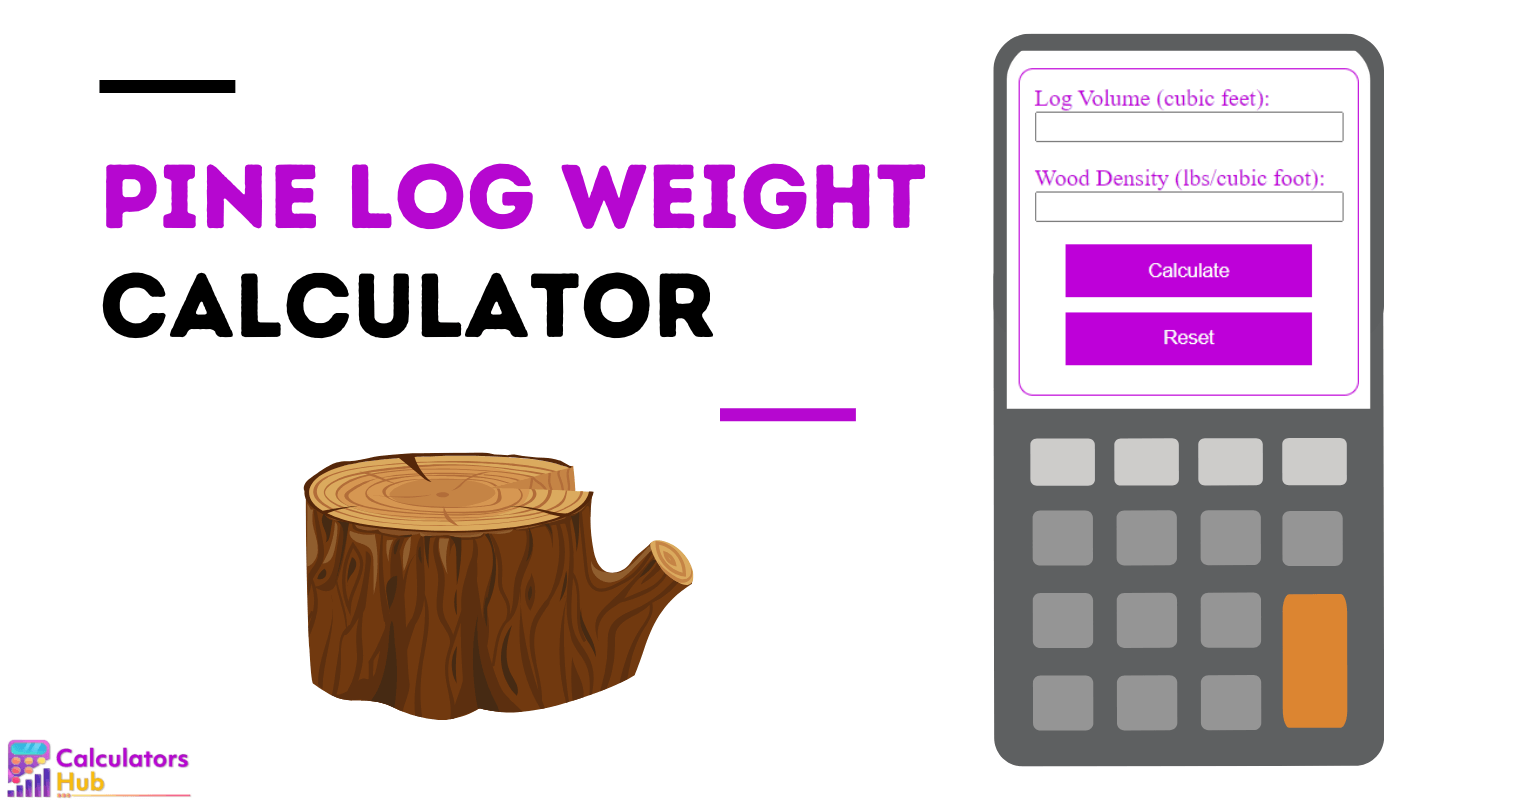 Pine Log Weight Calculator